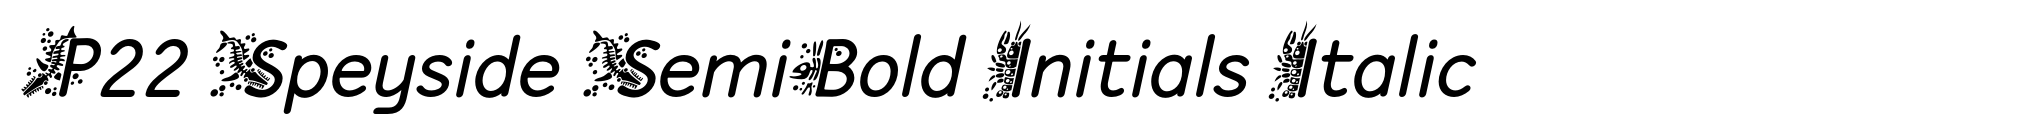 P22 Speyside SemiBold Initials Italic image